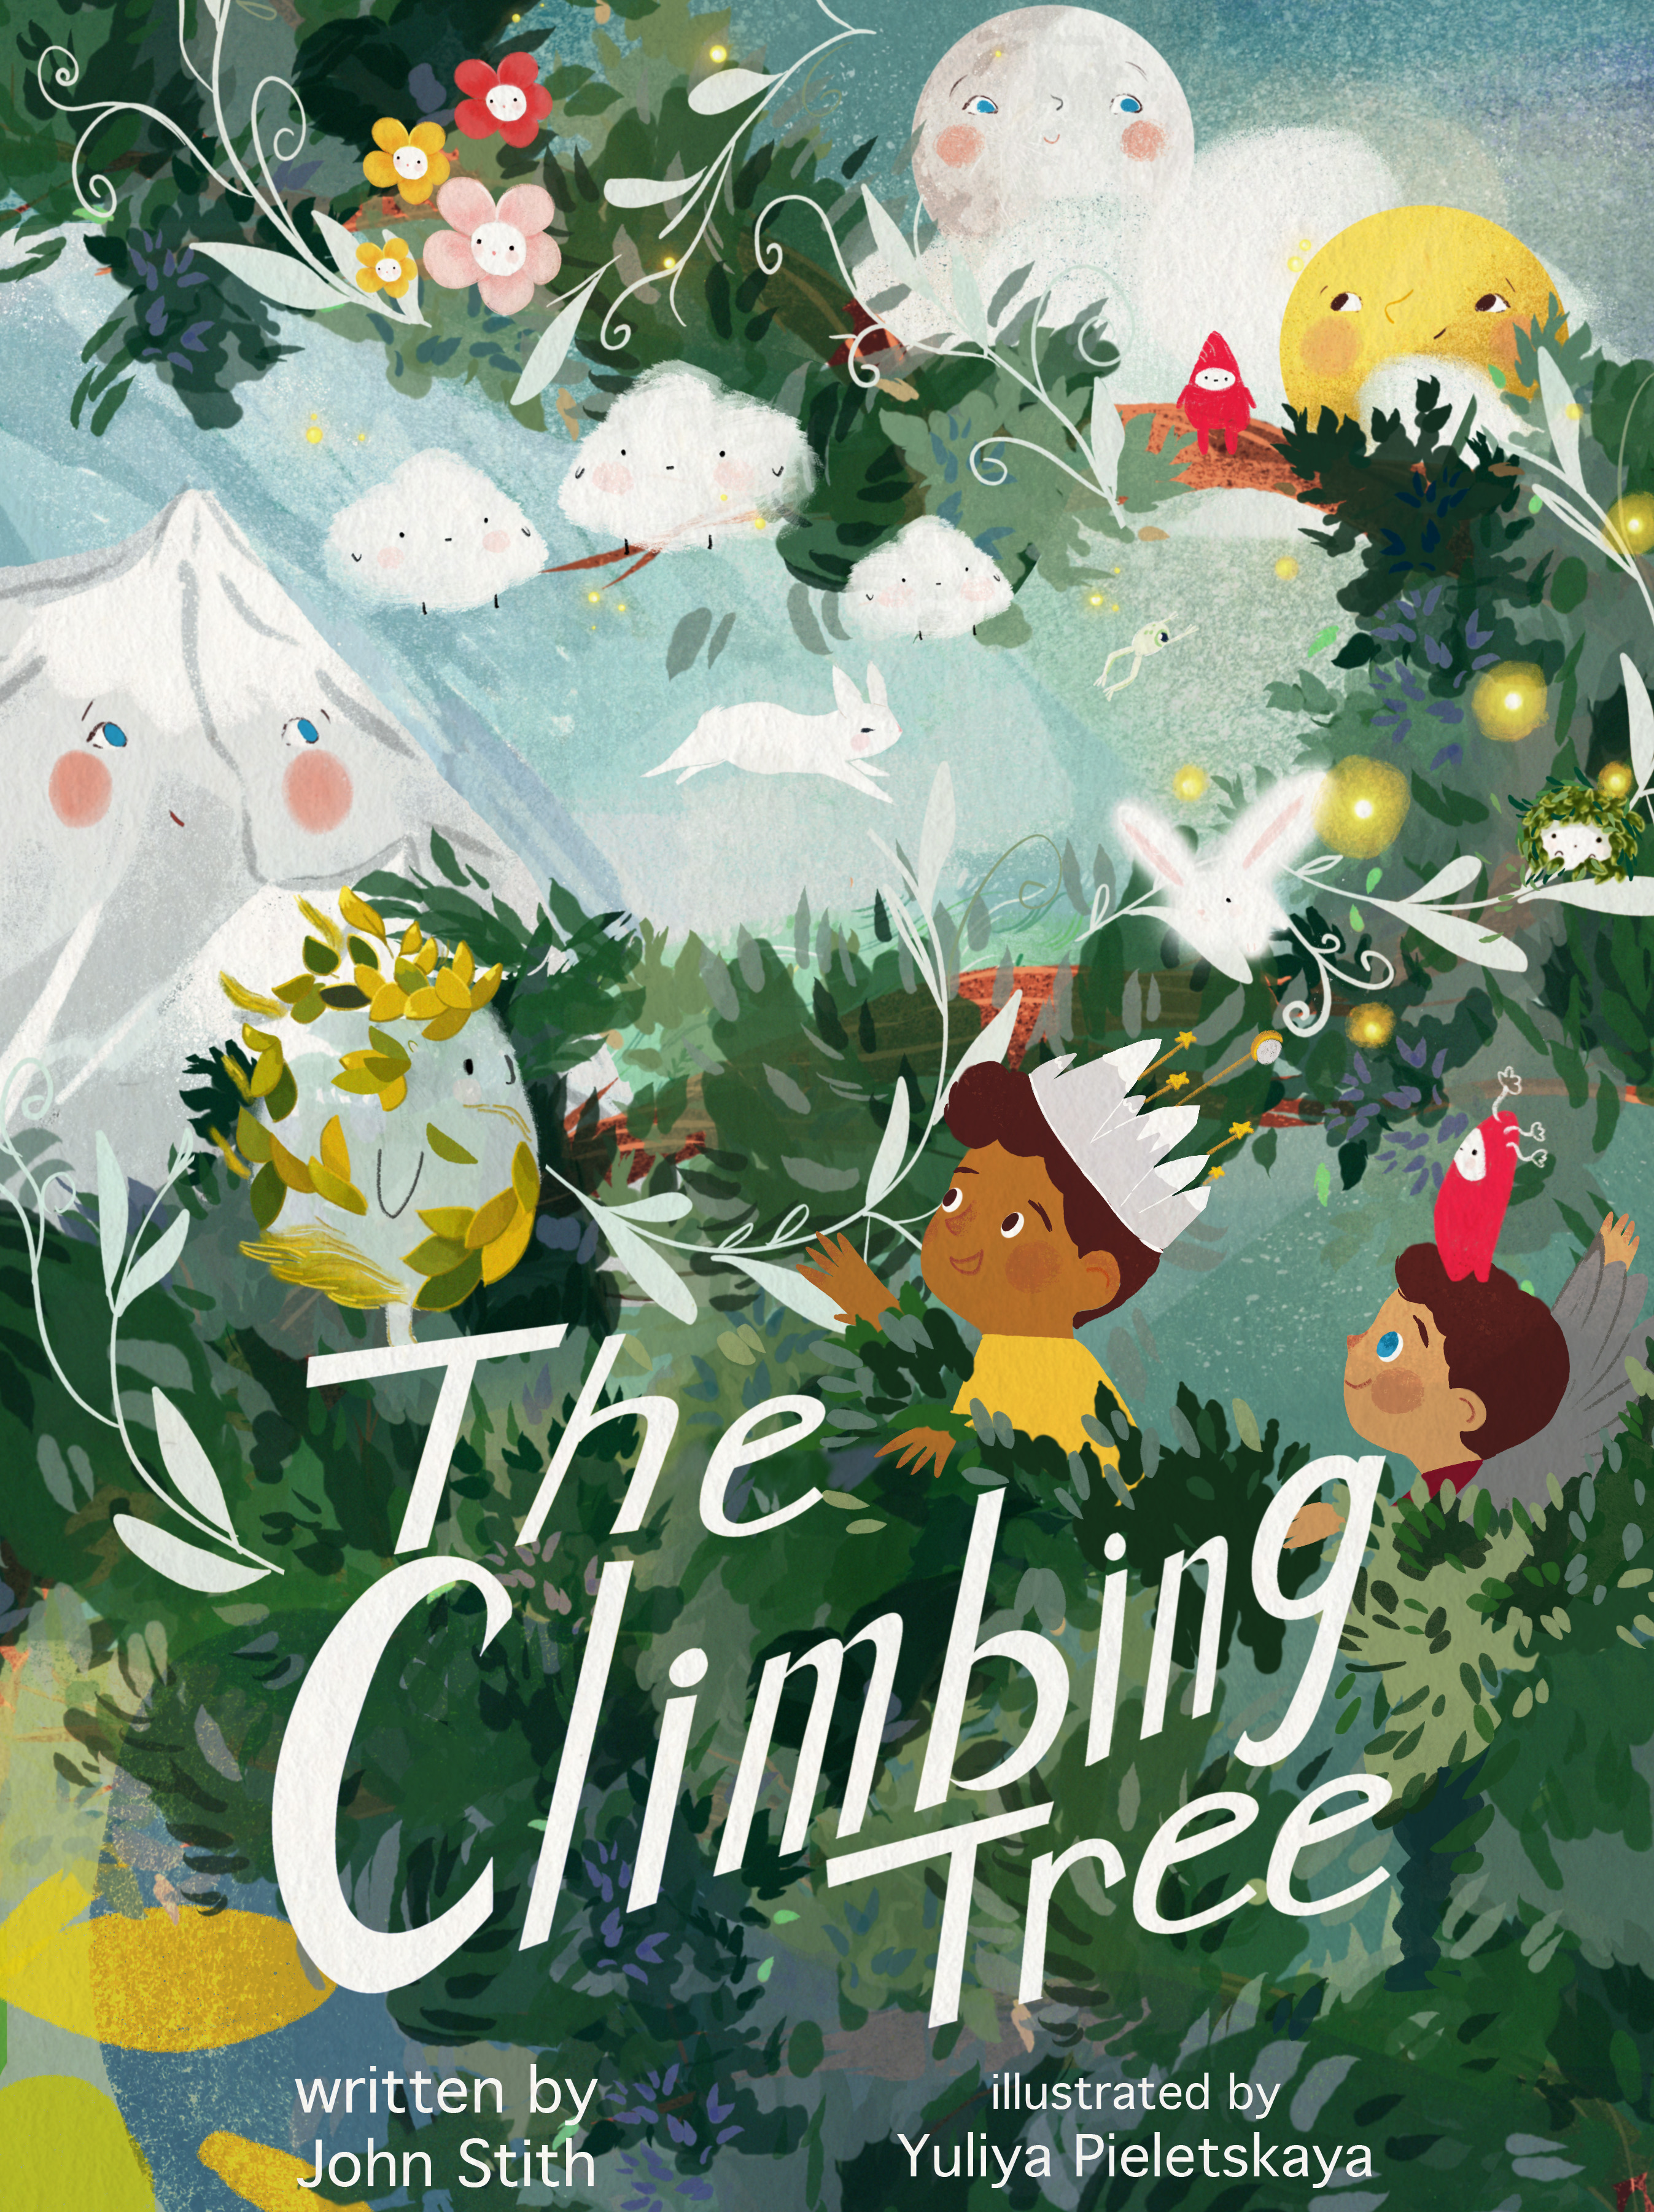 POW! Kids Books Sunday Story Time: The Climbing Tree by John Stith